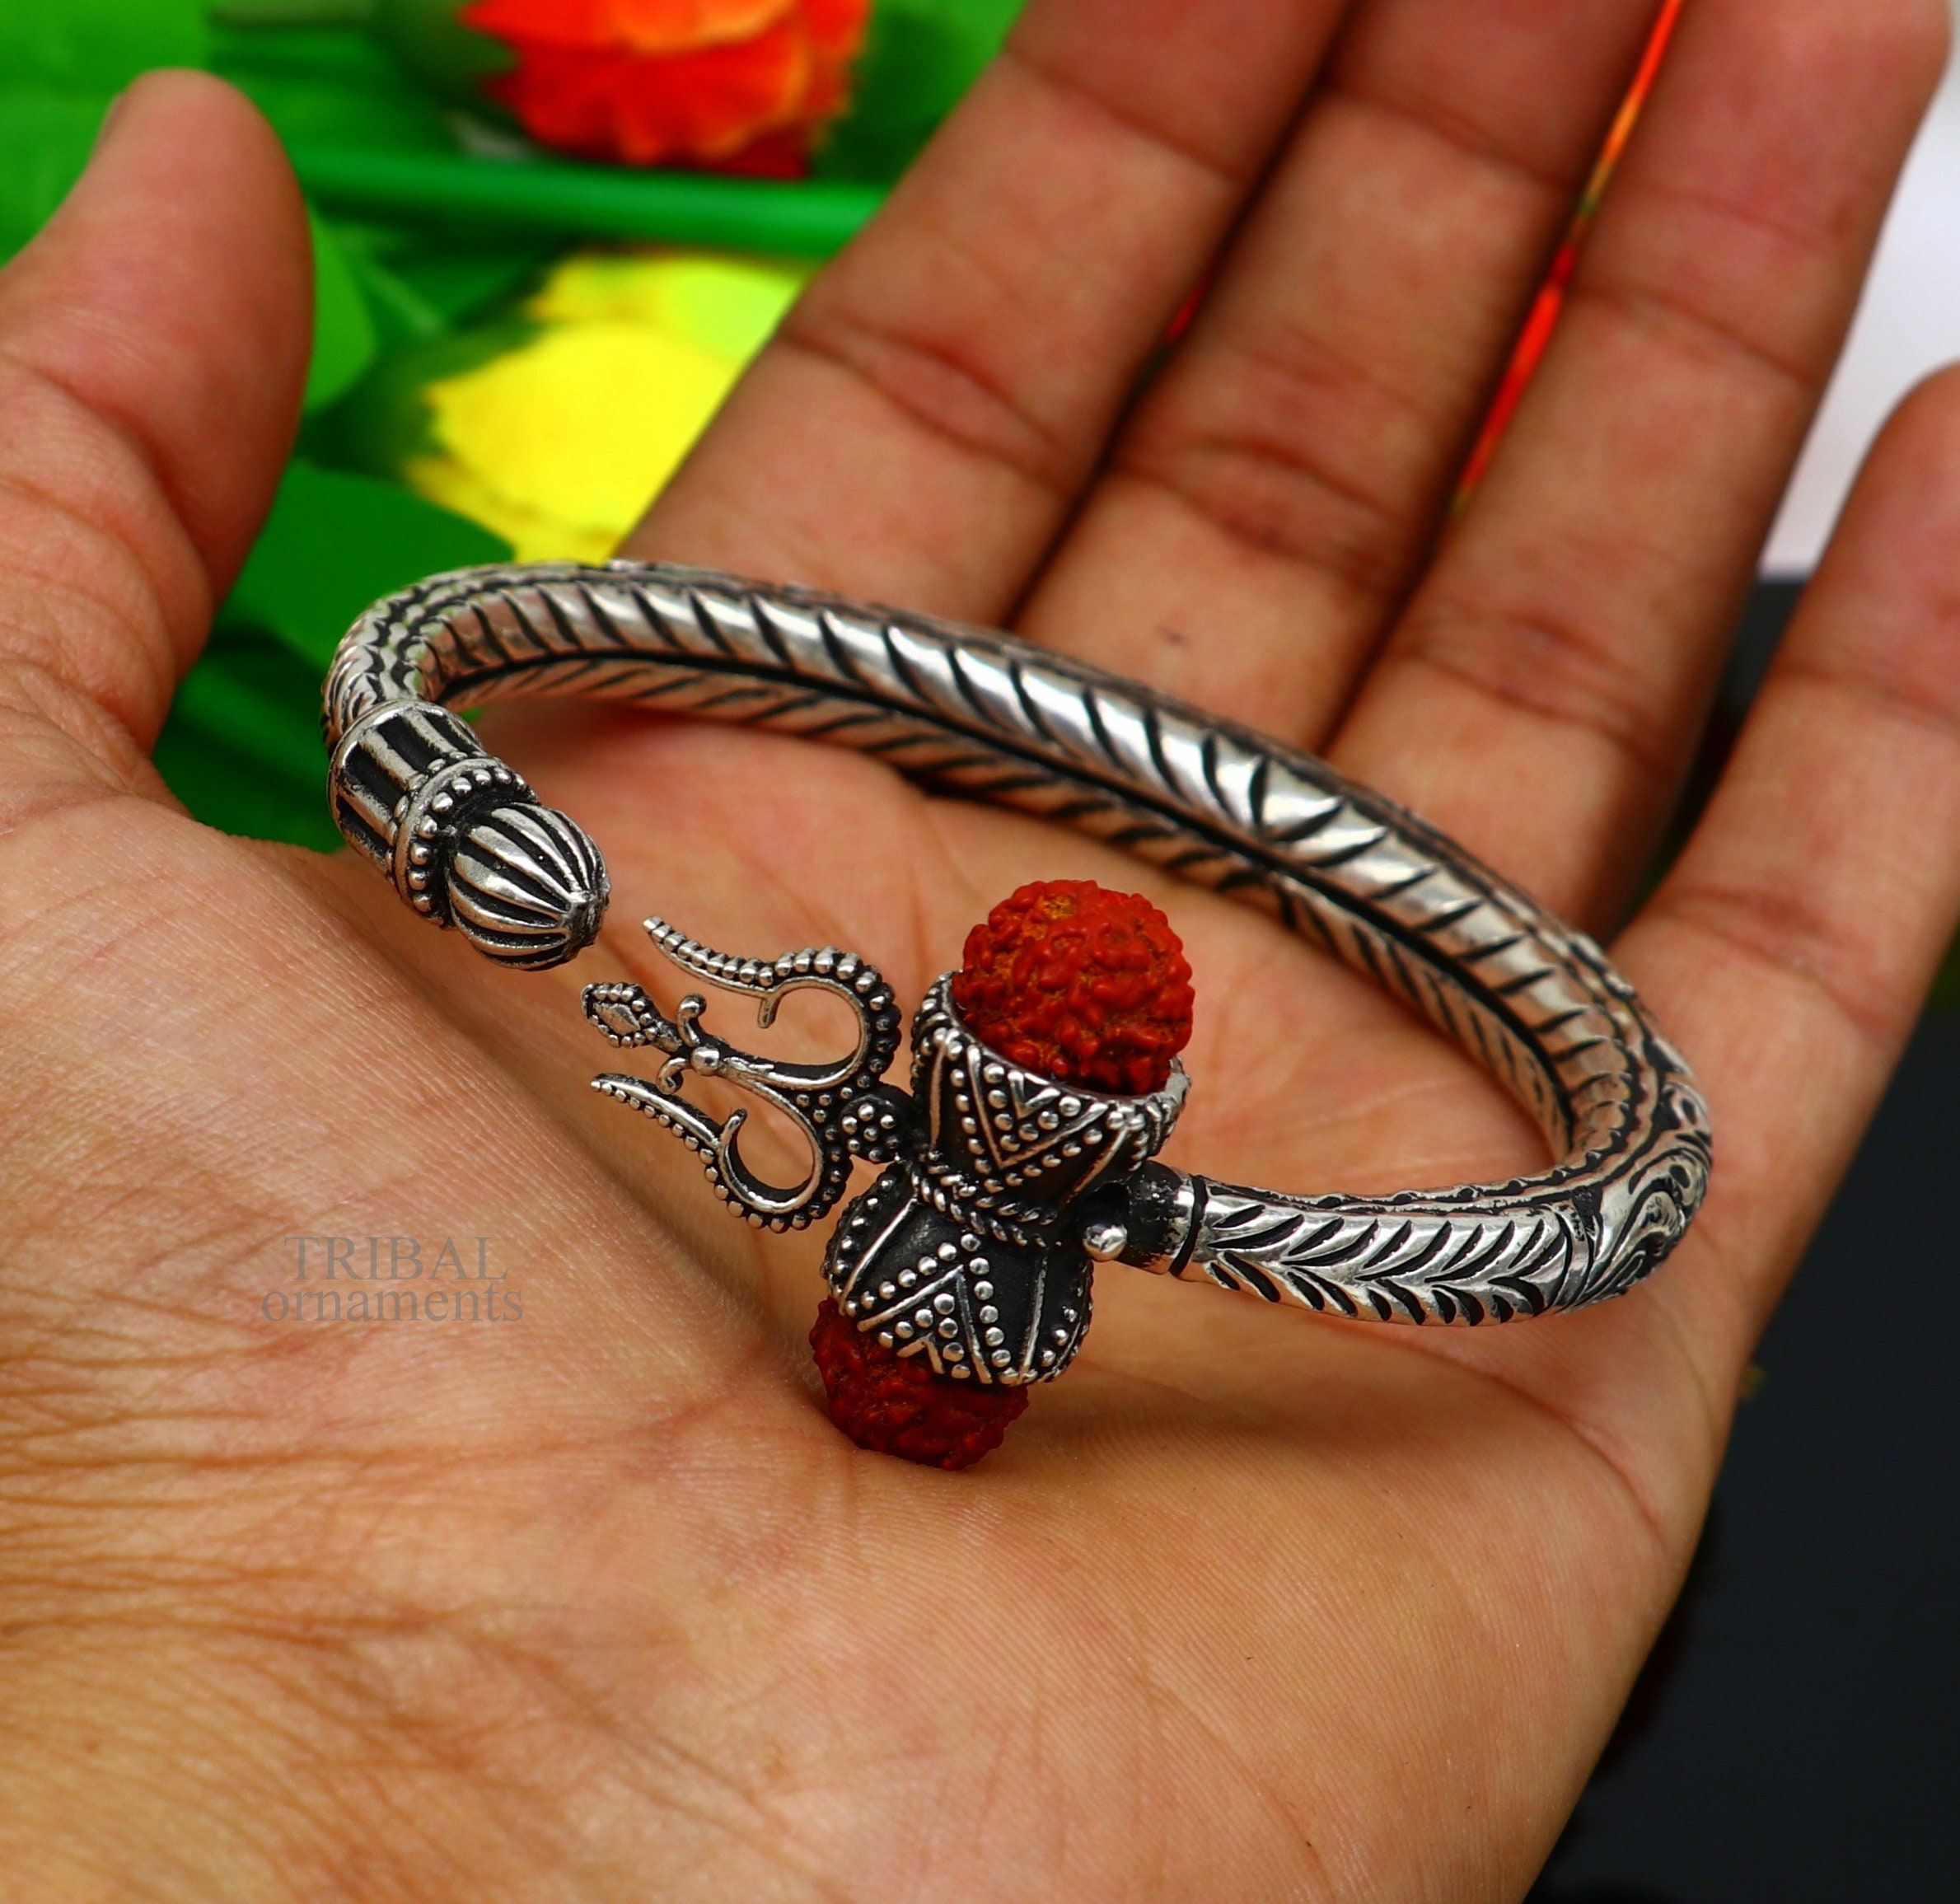 Devine 925 sterling silver handmade lord Shiva trident Trishul bangle  bracelet kada, best gift for girl's or boy's stunning bangle nssk419 |  TRIBAL ORNAMENTS